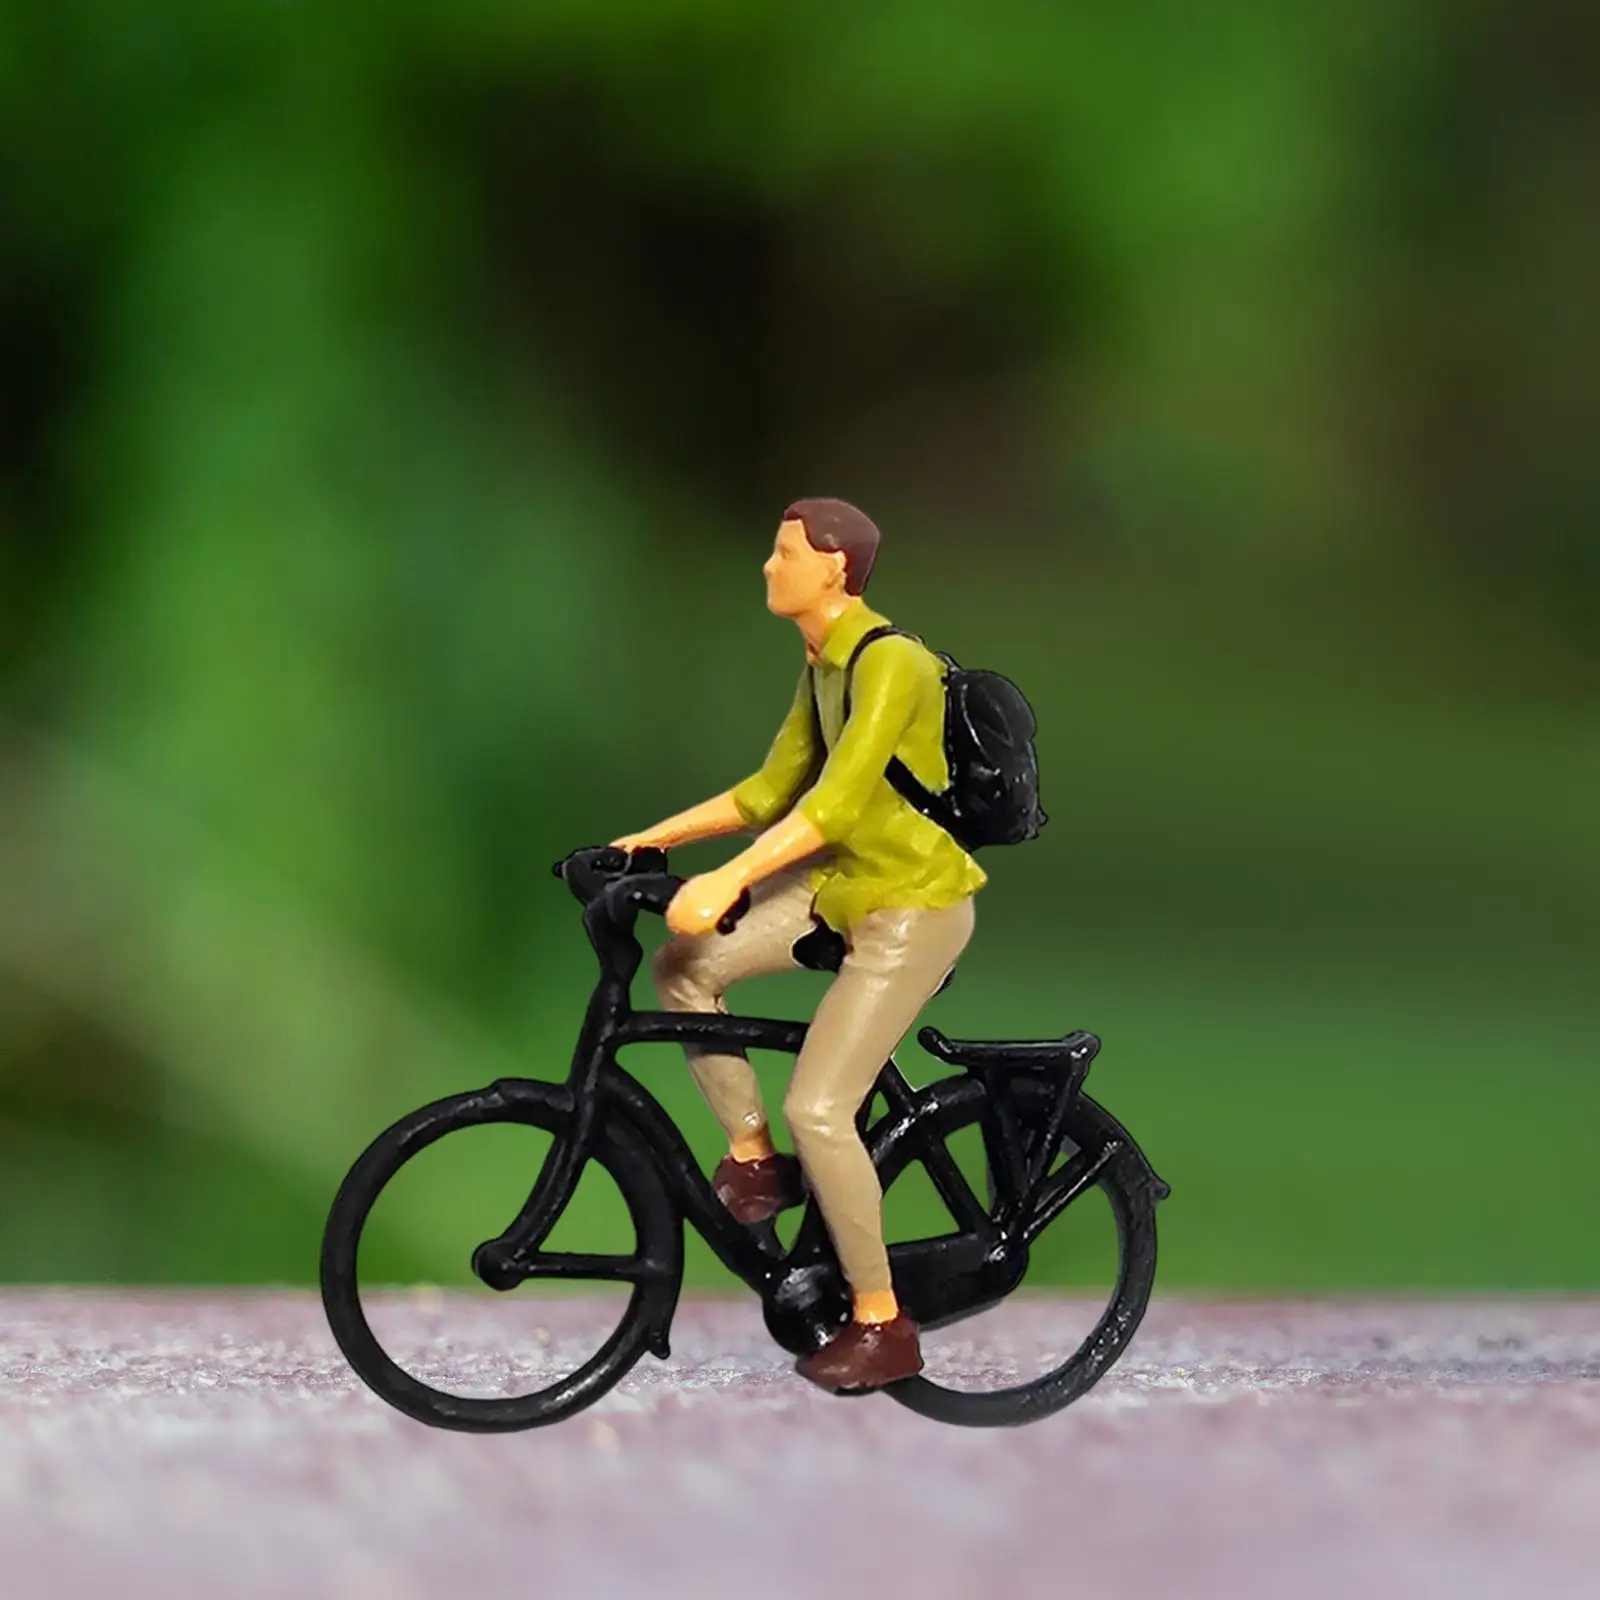 Realistic 1/87 Scale Cyclist Figures Mini People Model Ornament for Miniature Scene Diorama Dollhouse Sand Table Layout